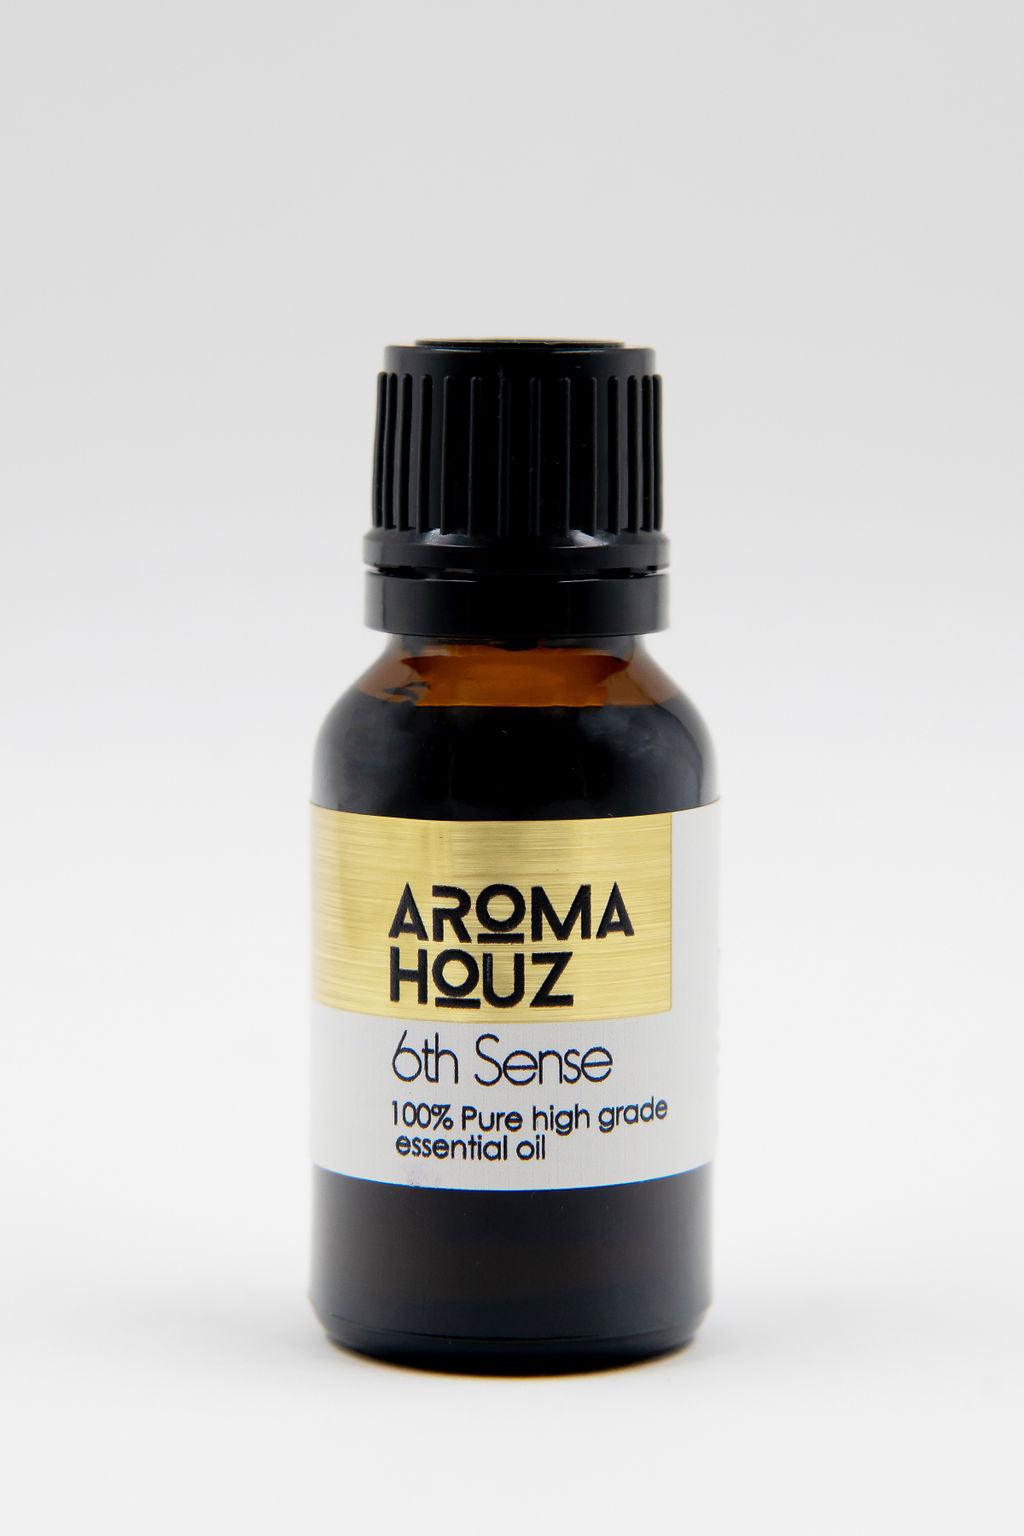 6th Sense By Chloe 100% Pure Essential Oil Blend - Aroma Houz